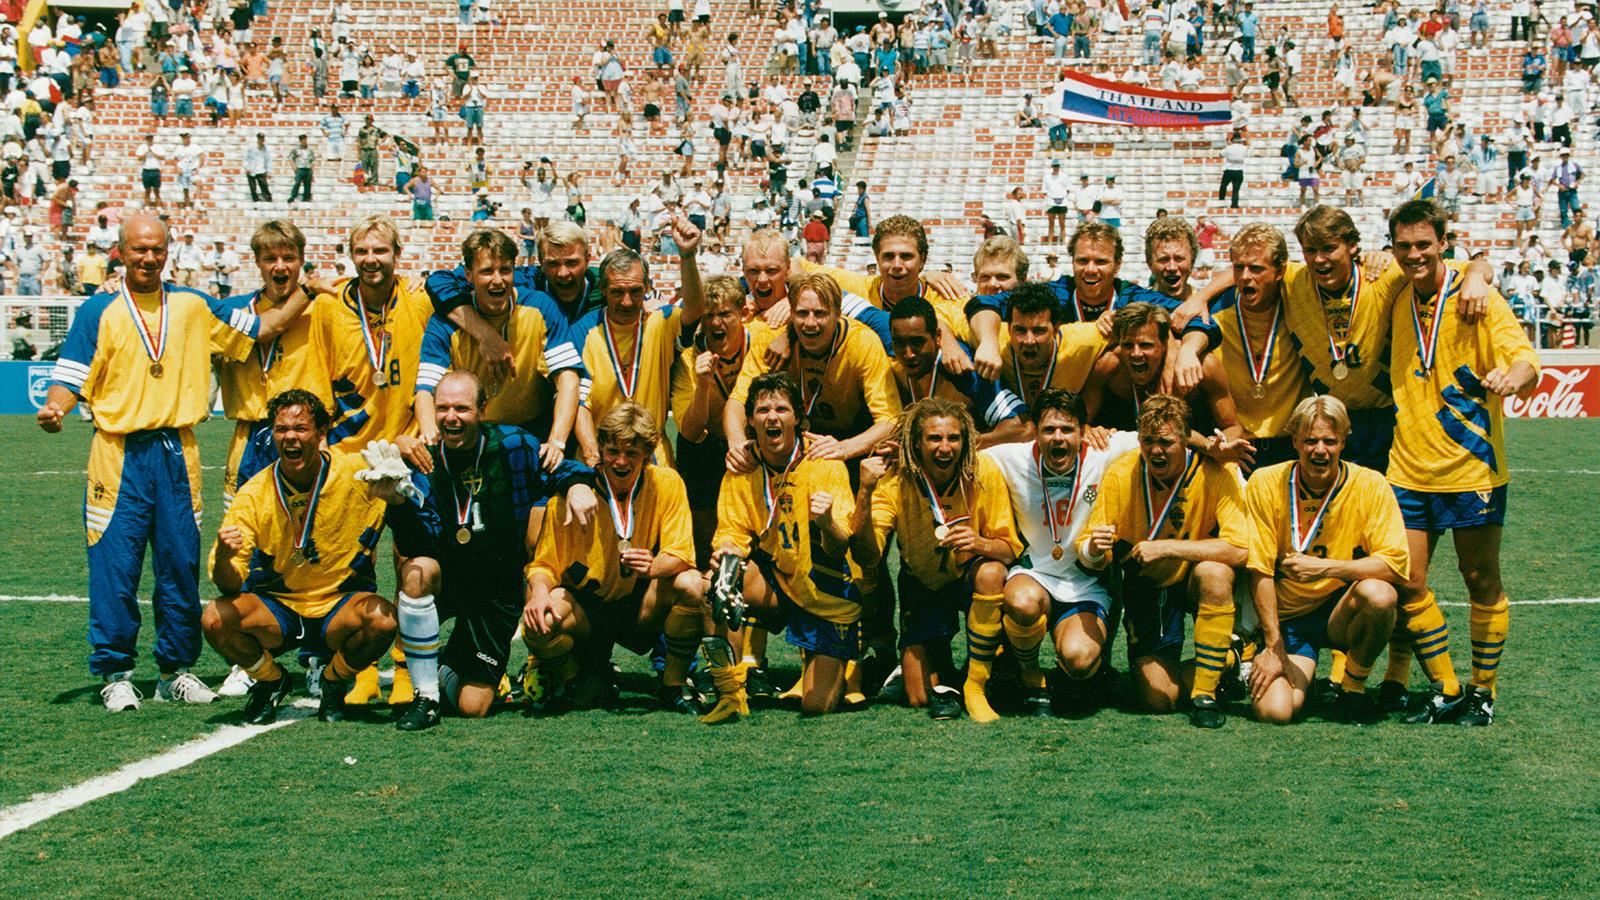 VM-laget som tog brons i USA 1994 med Ravelli i målet.